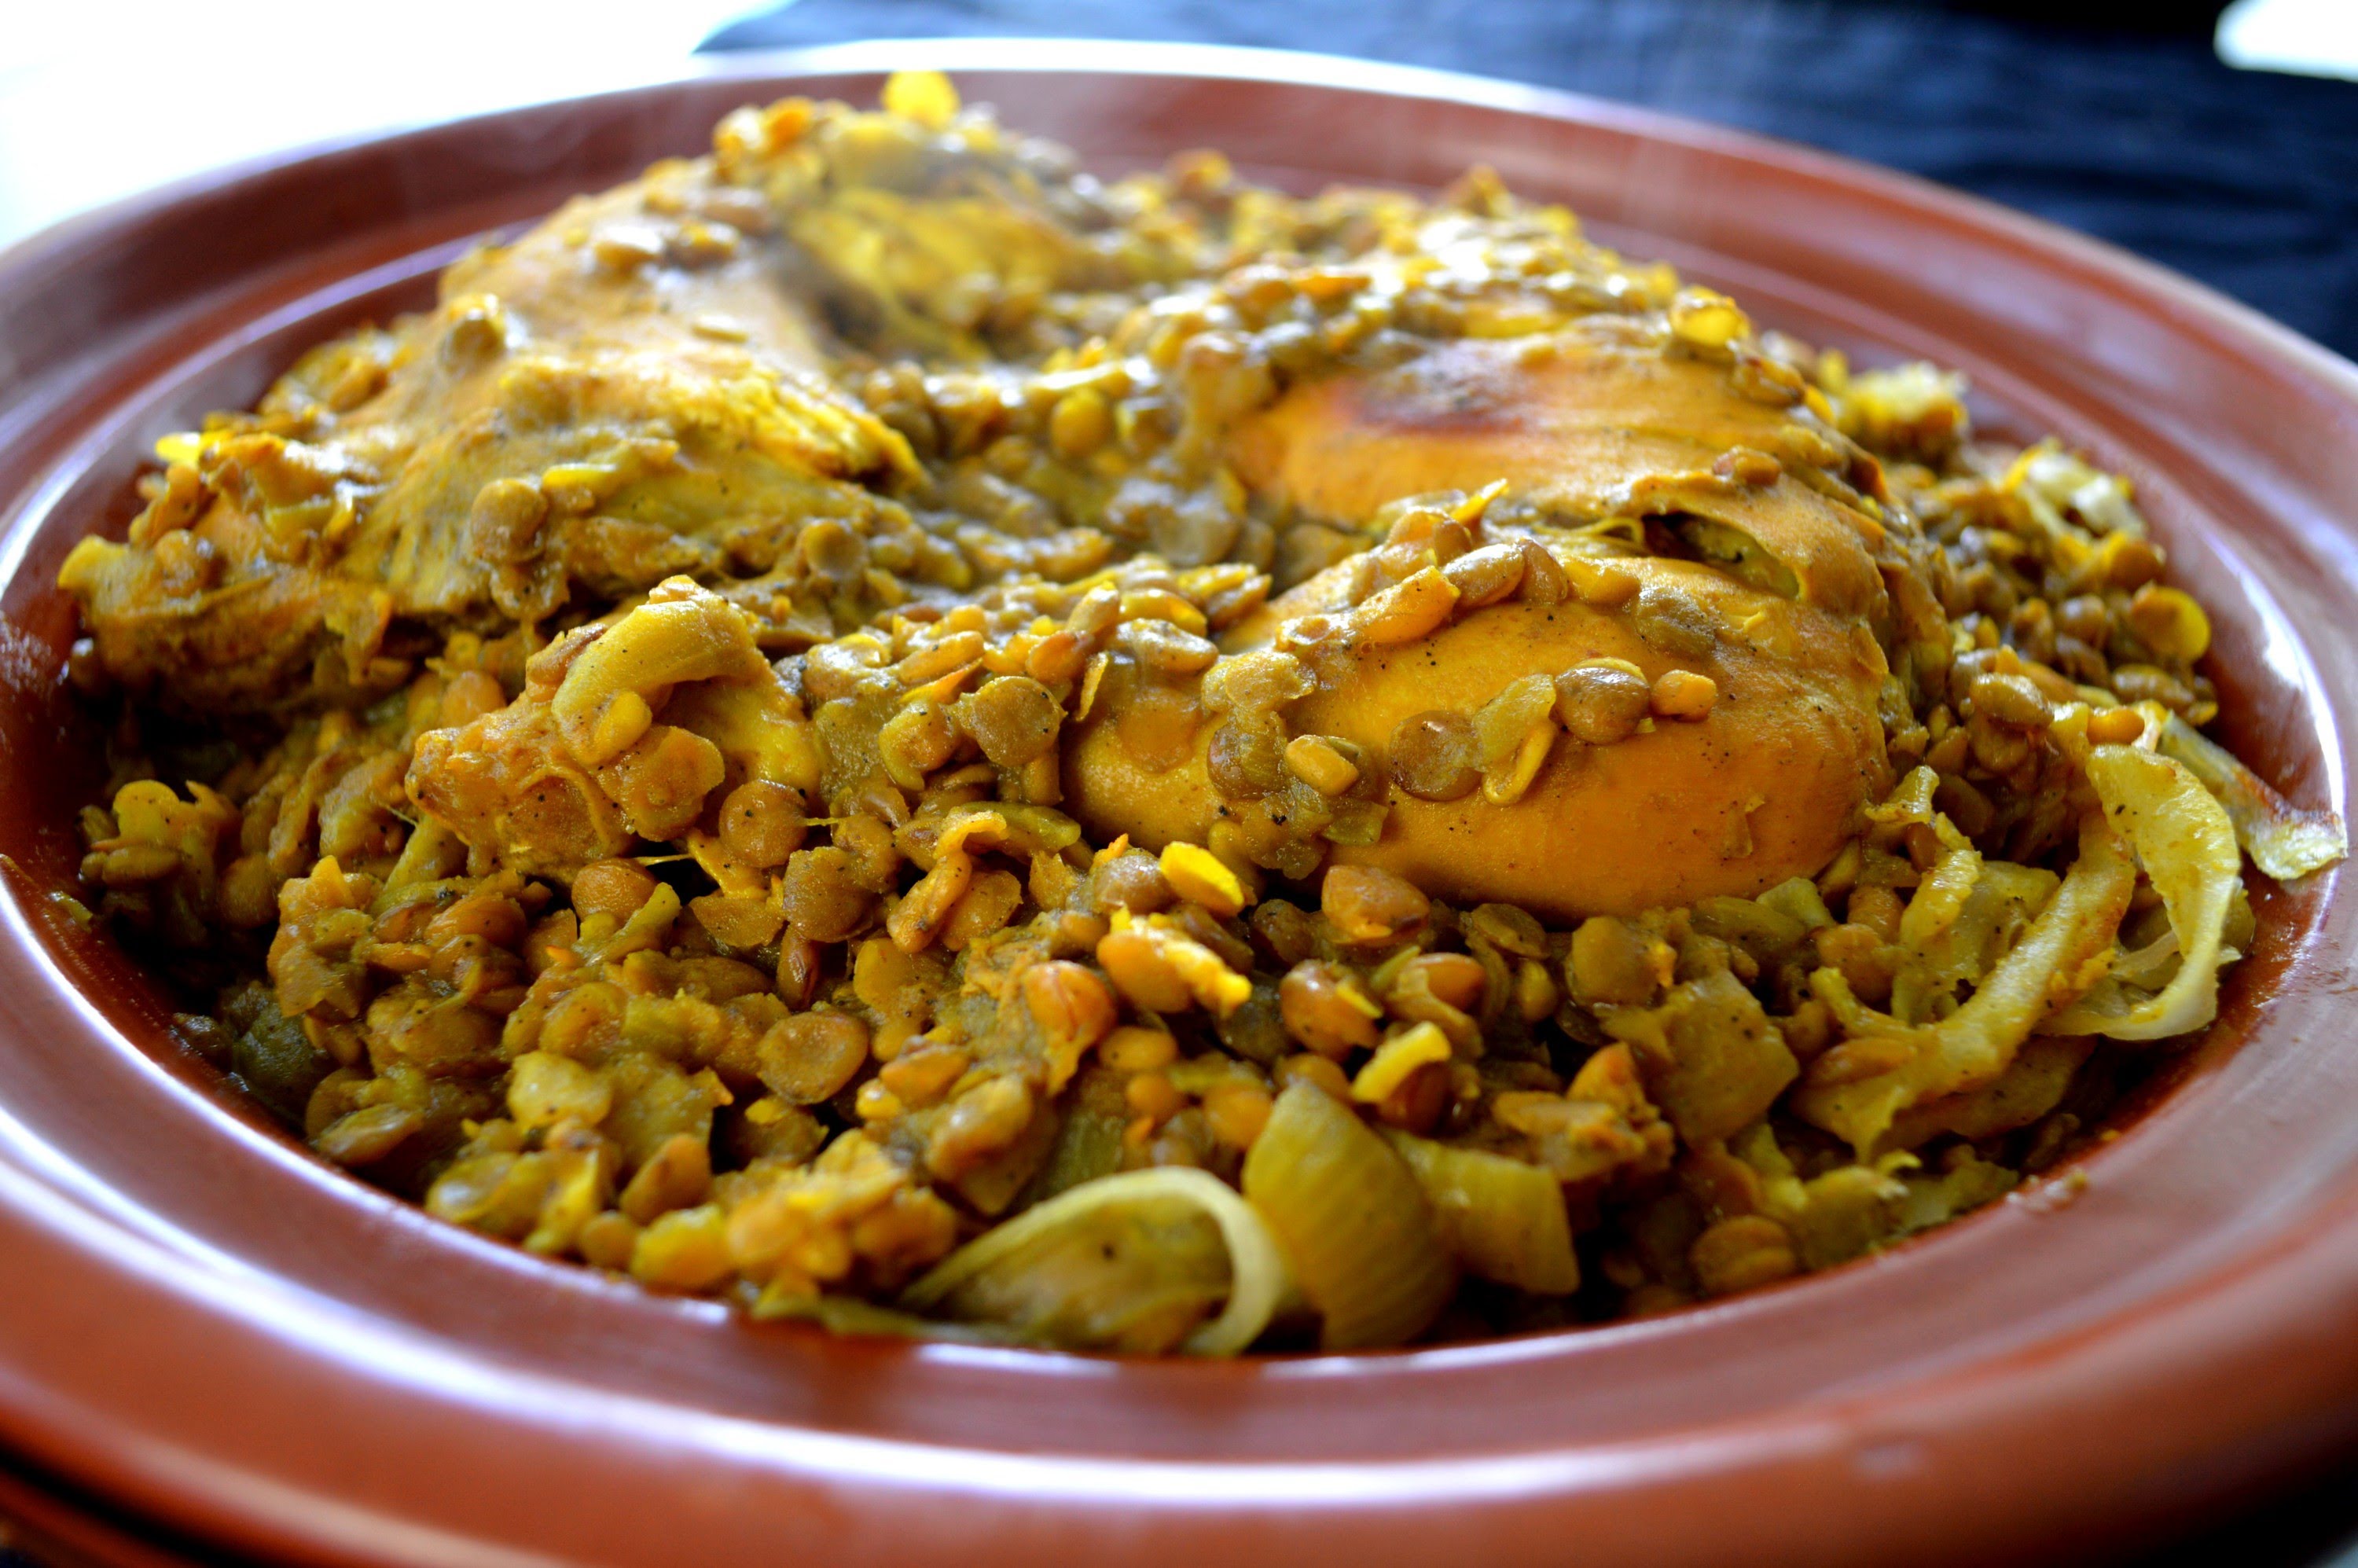 rfisa-gastronomie-plat-maroc